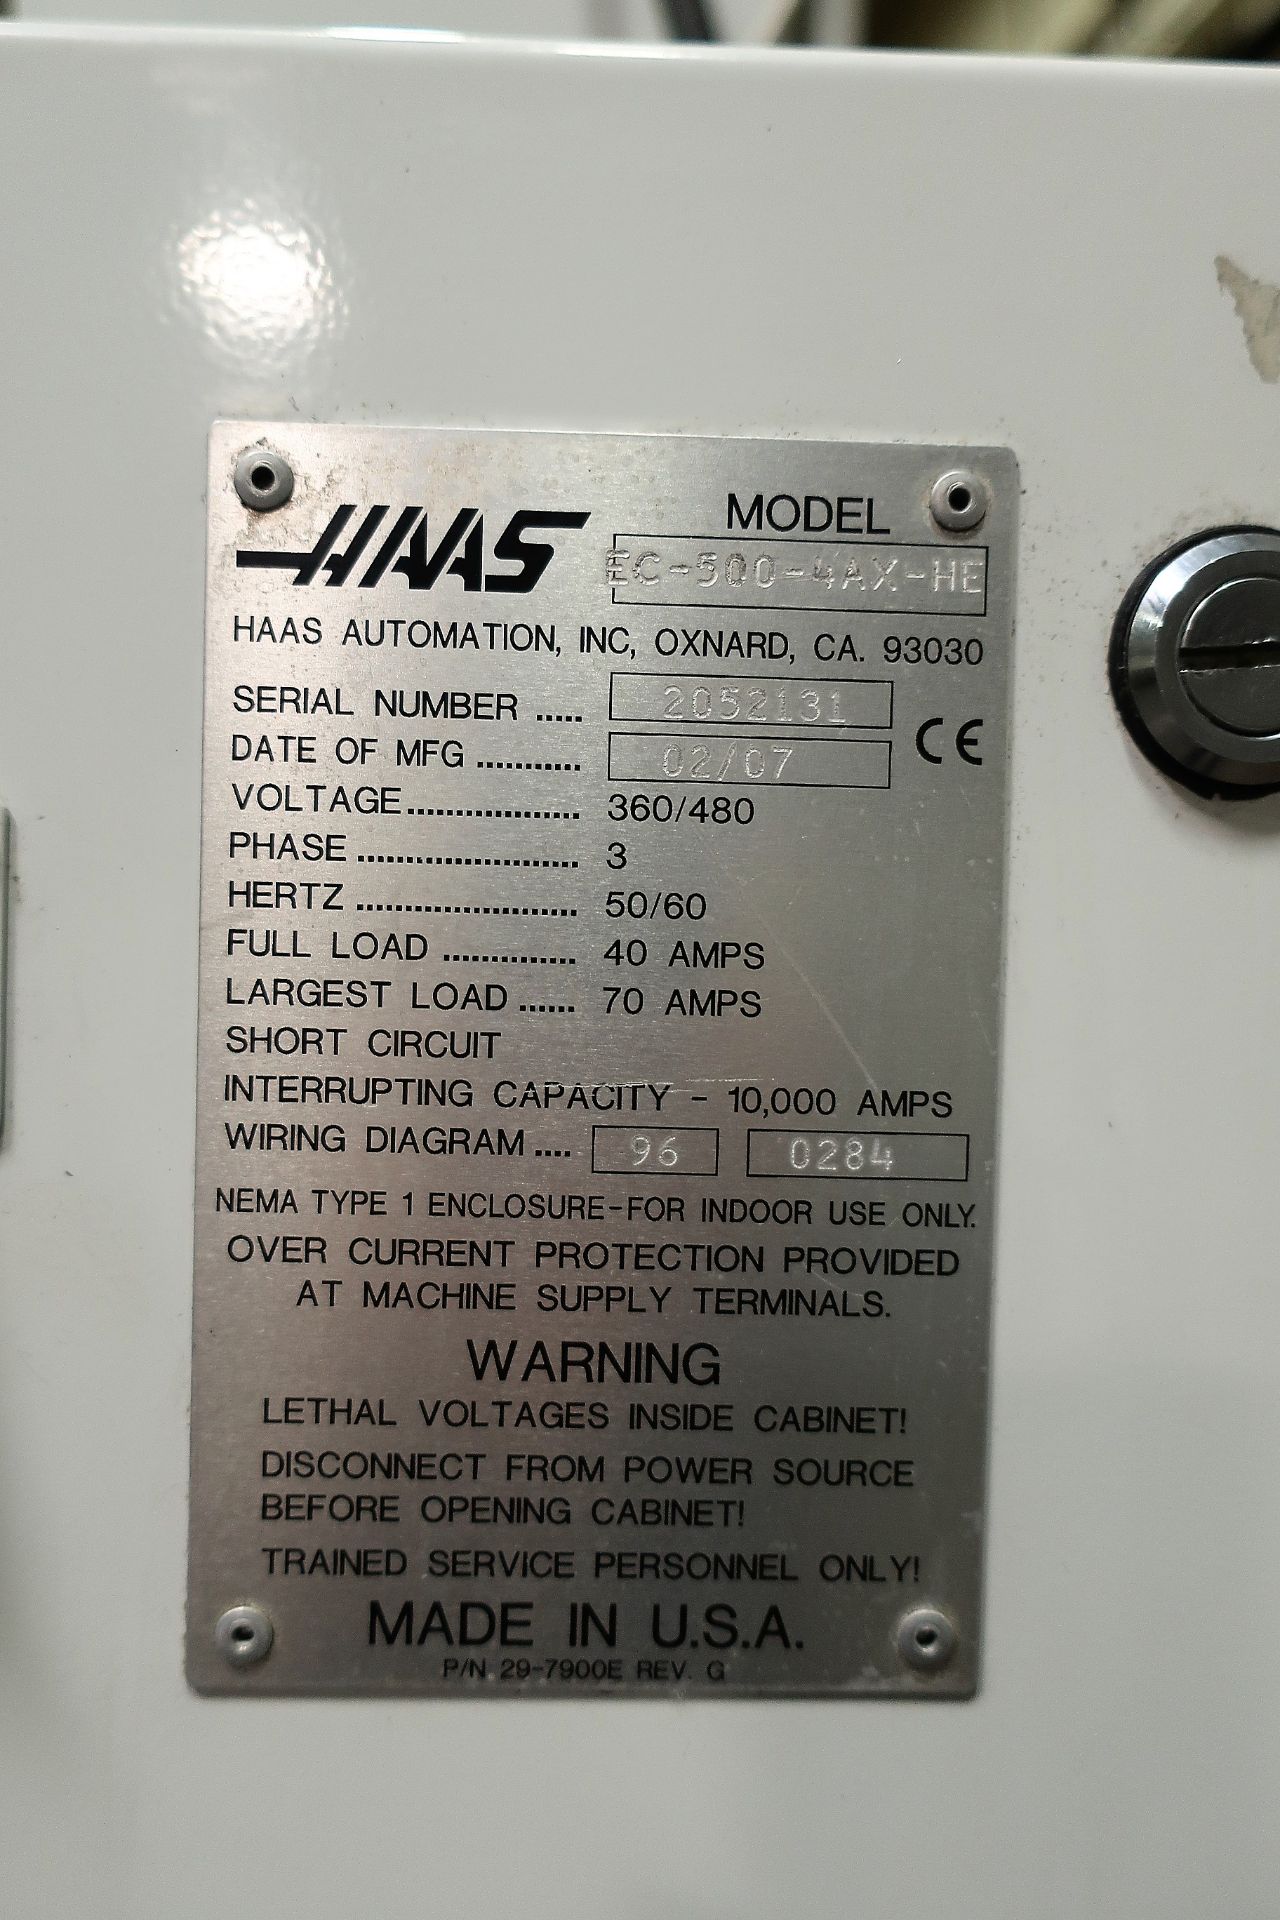 19.7"X19.7" HAAS EC-500 4-AXIS CNC HORIZONTAL MACHINING CENTER, S/N 2052131, NEW 2007 - Image 9 of 11